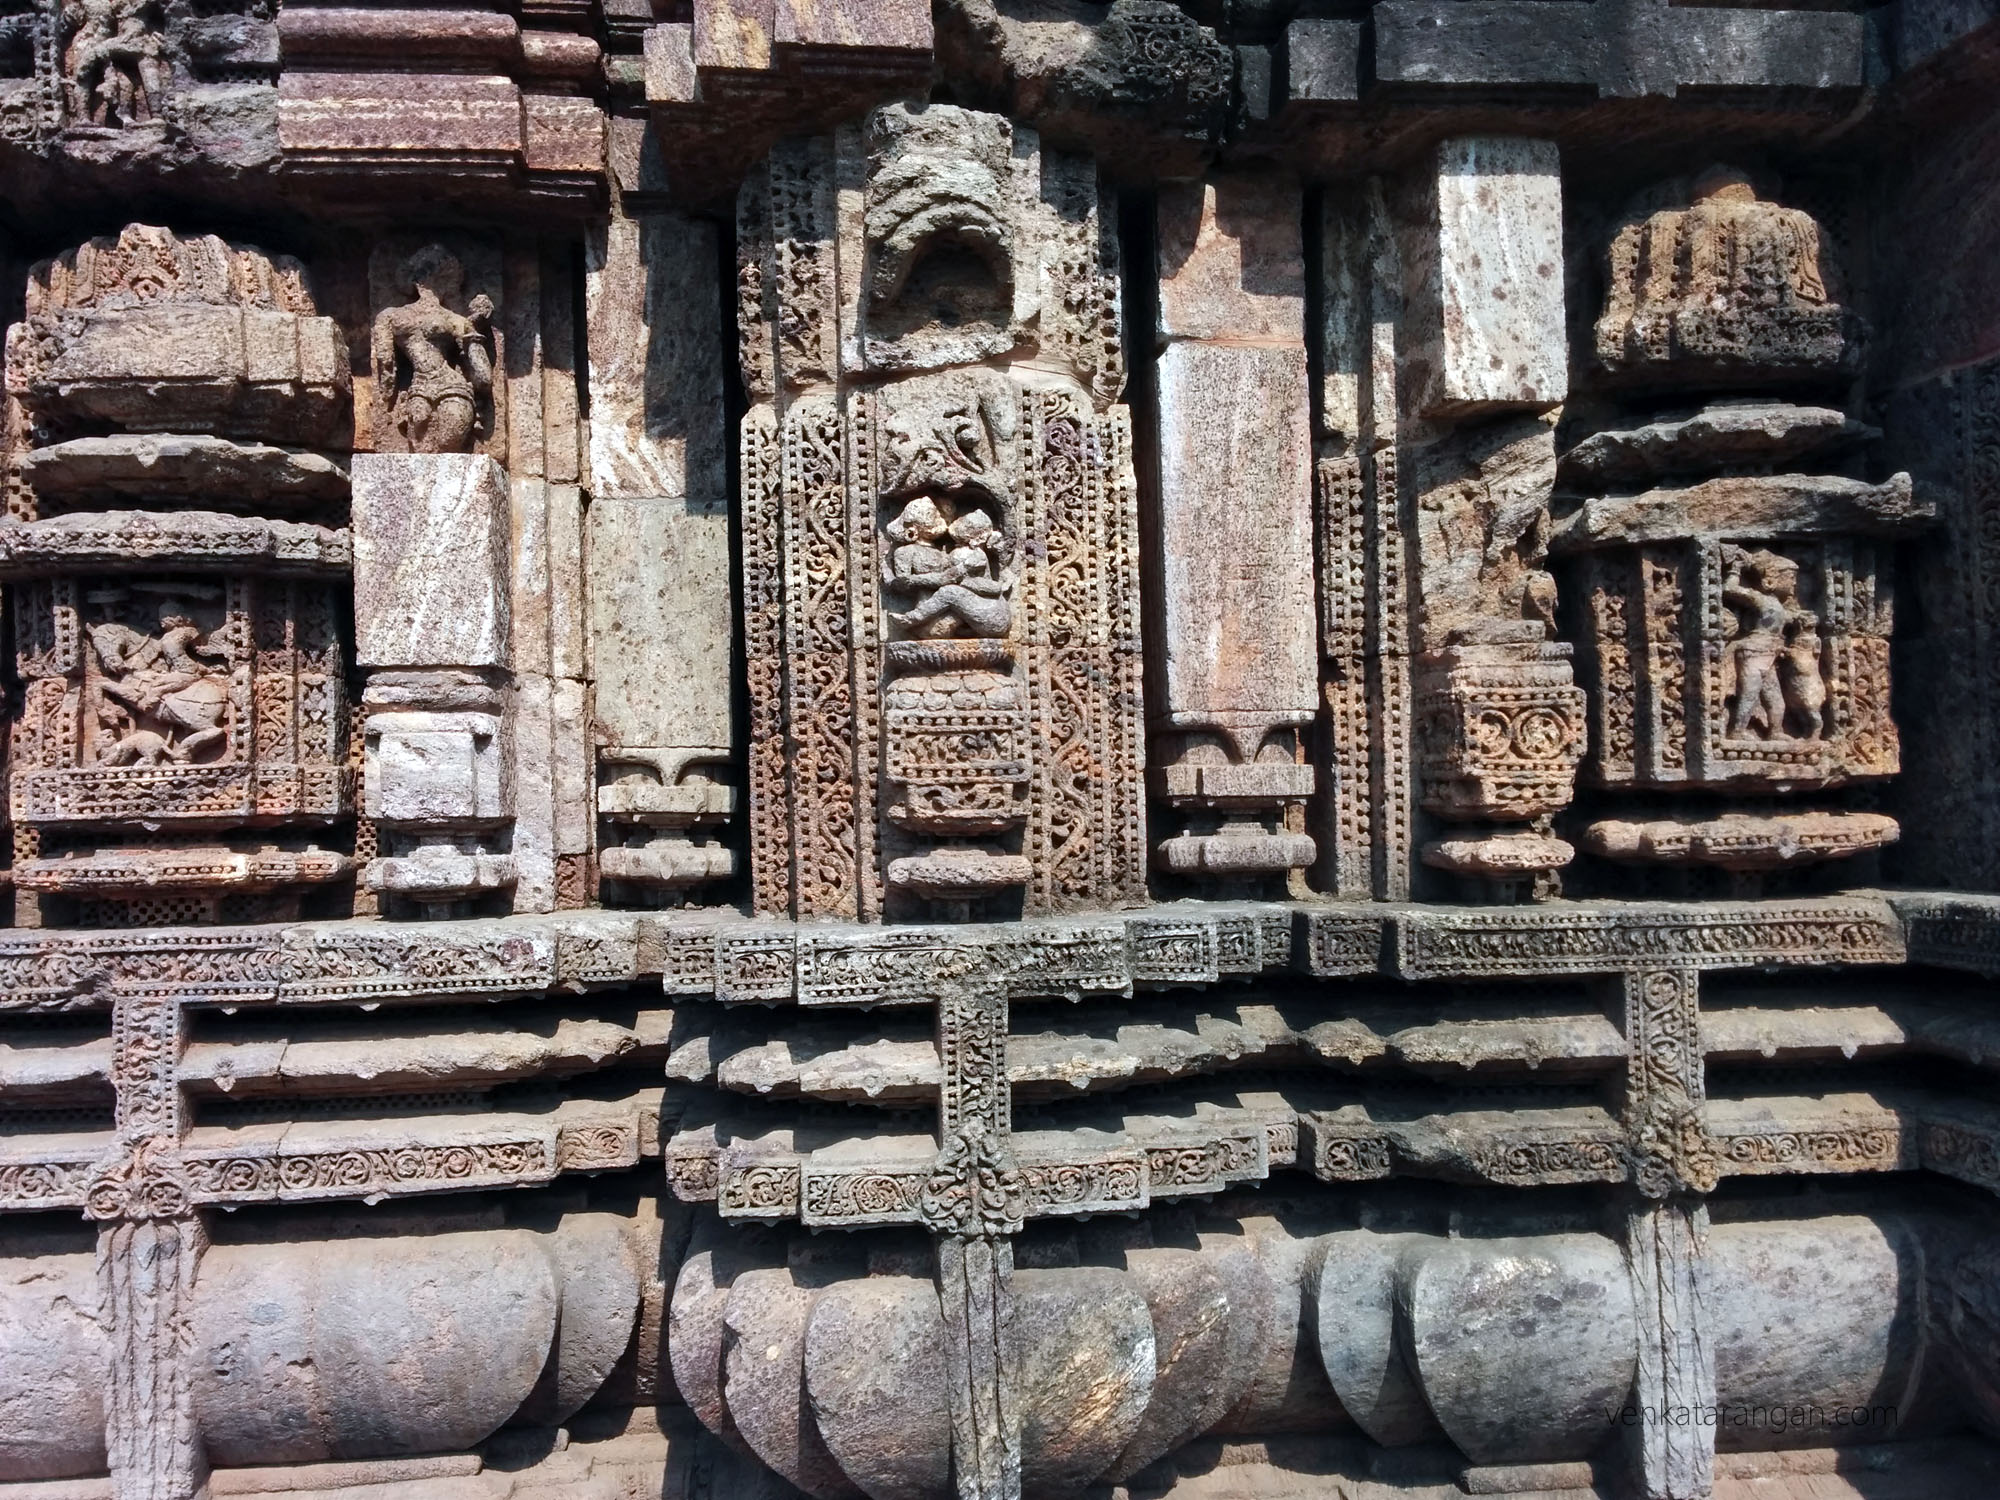 Konark Sun Temple - intricate carvings everywhere